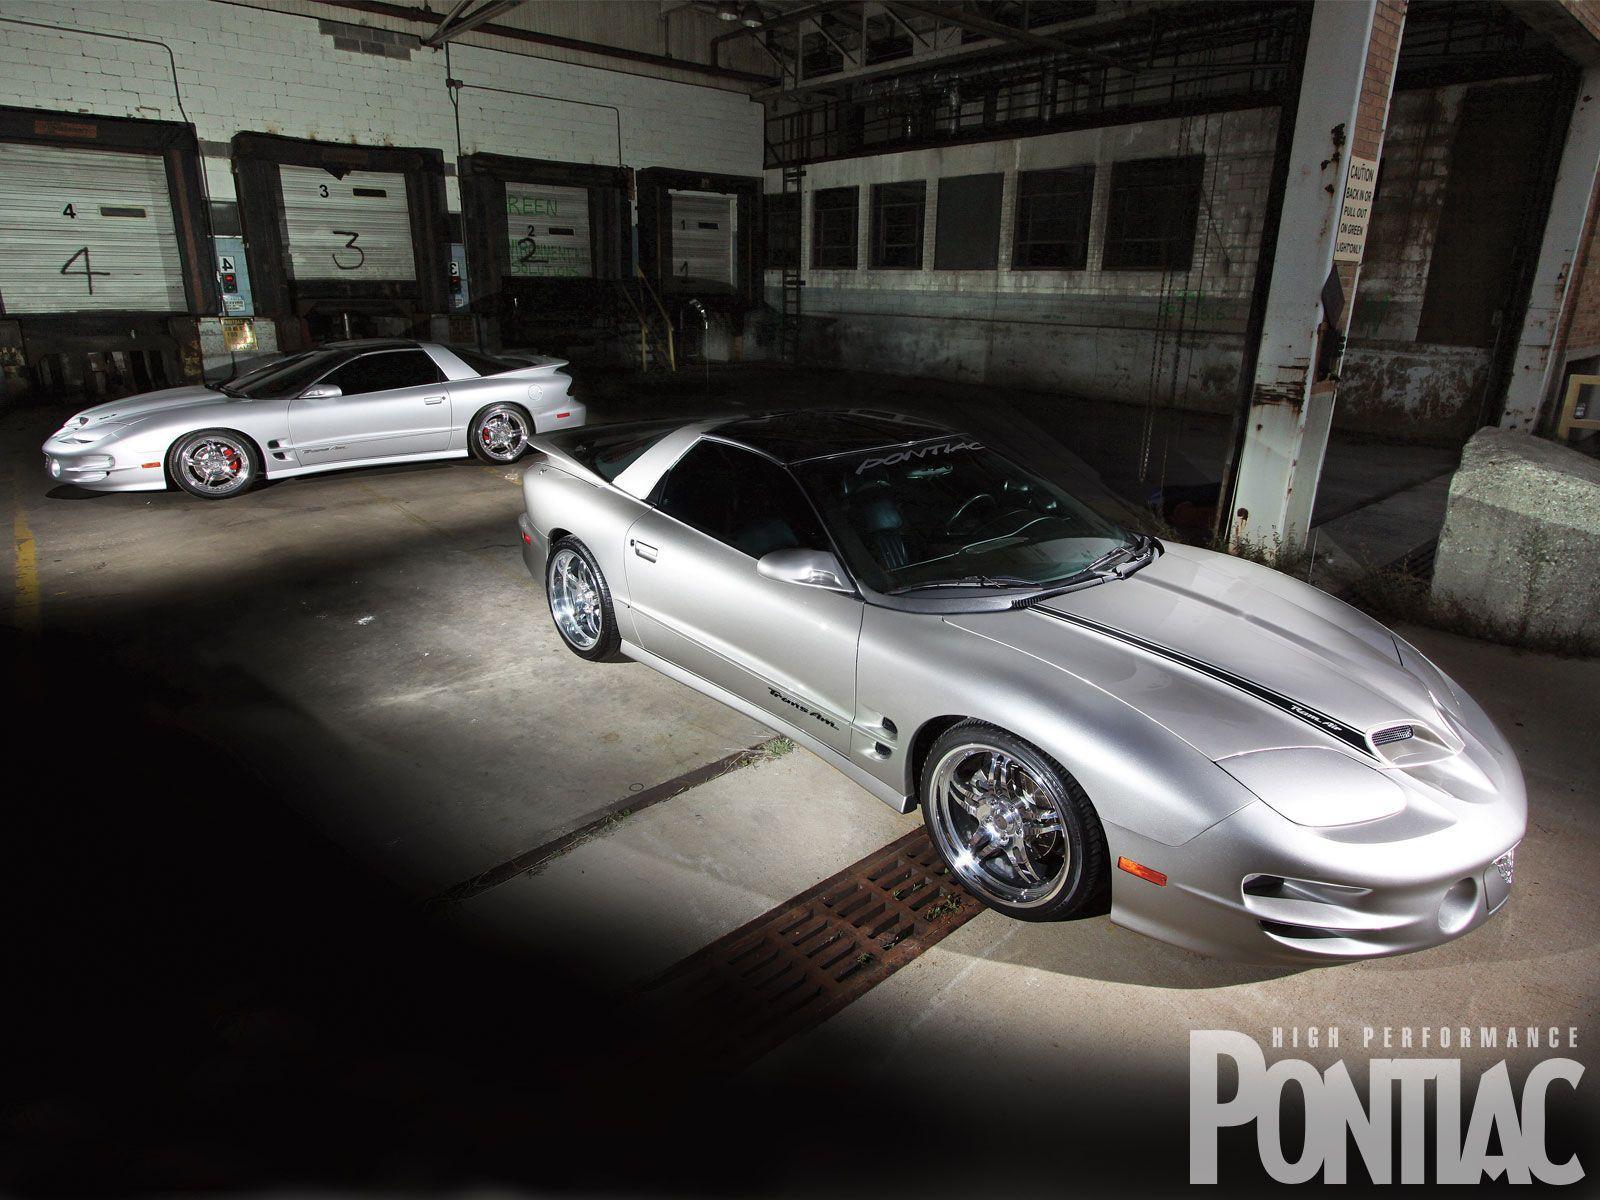 image For > Pontiac Trans Am Ws6 Wallpaper